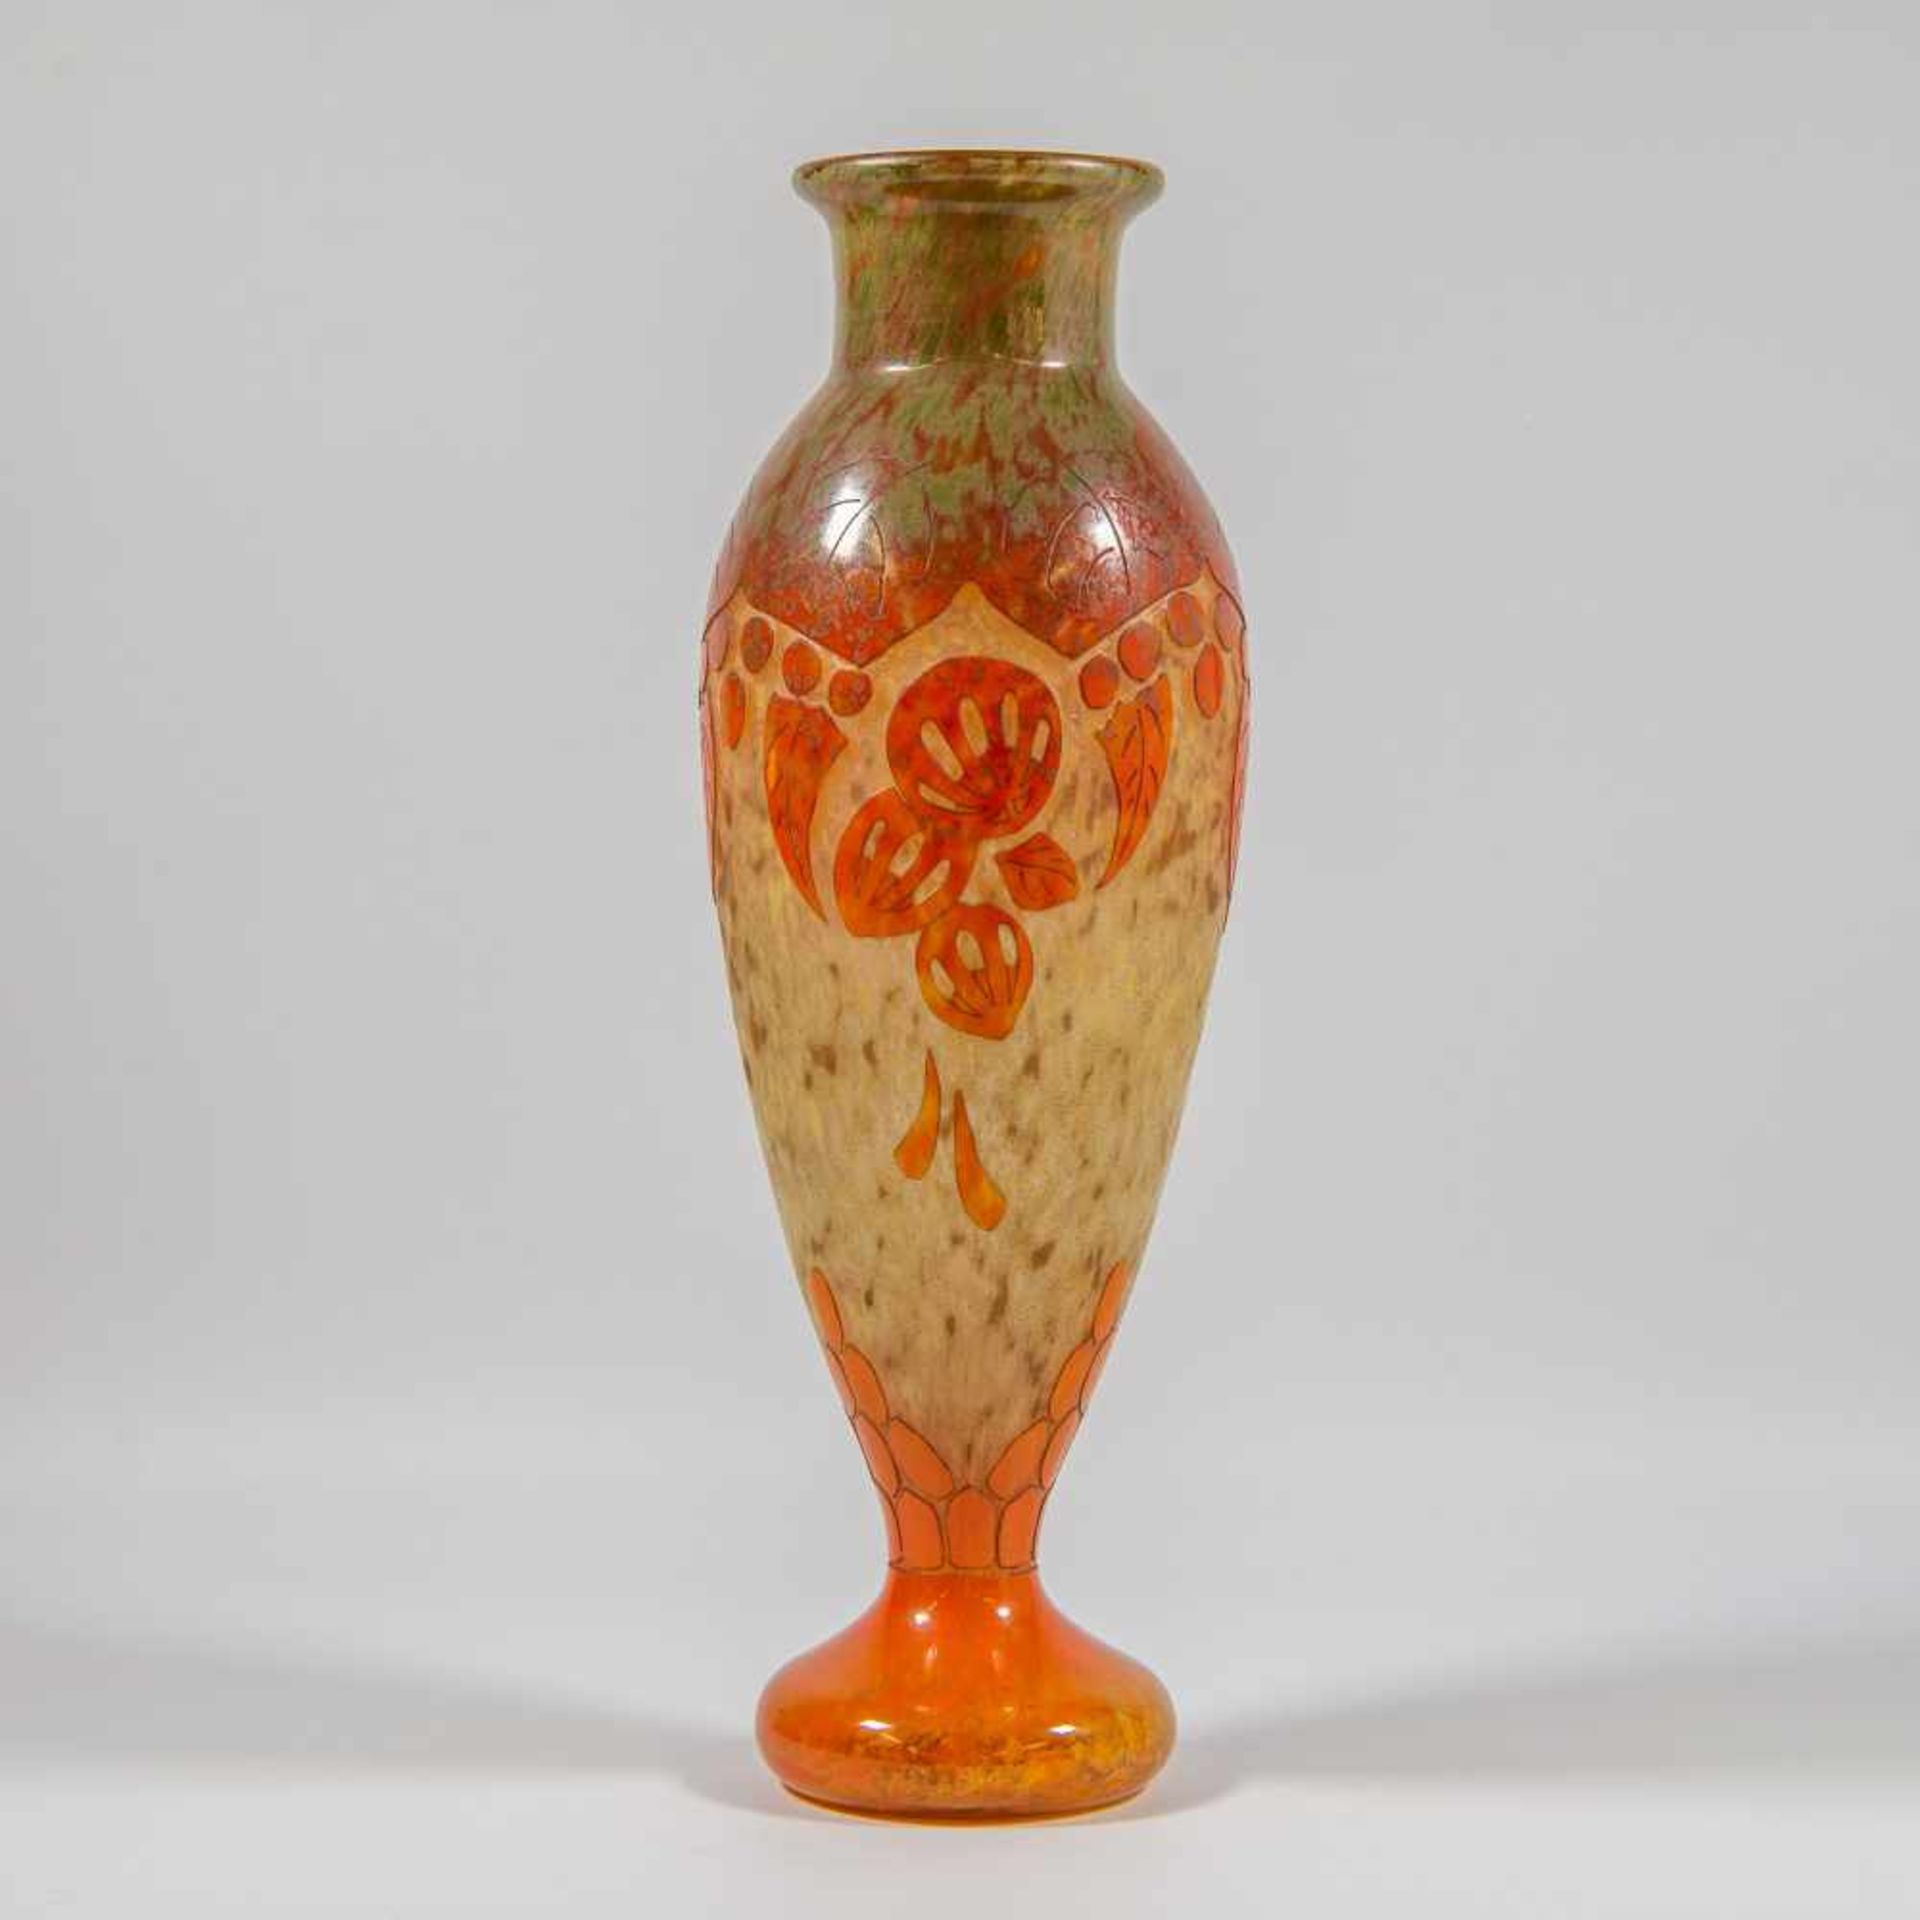 SCHNEIDERSchneider, glass vase, marked on base. Length: 0 cm , Width: 0 cm, Hight: 45 cm,